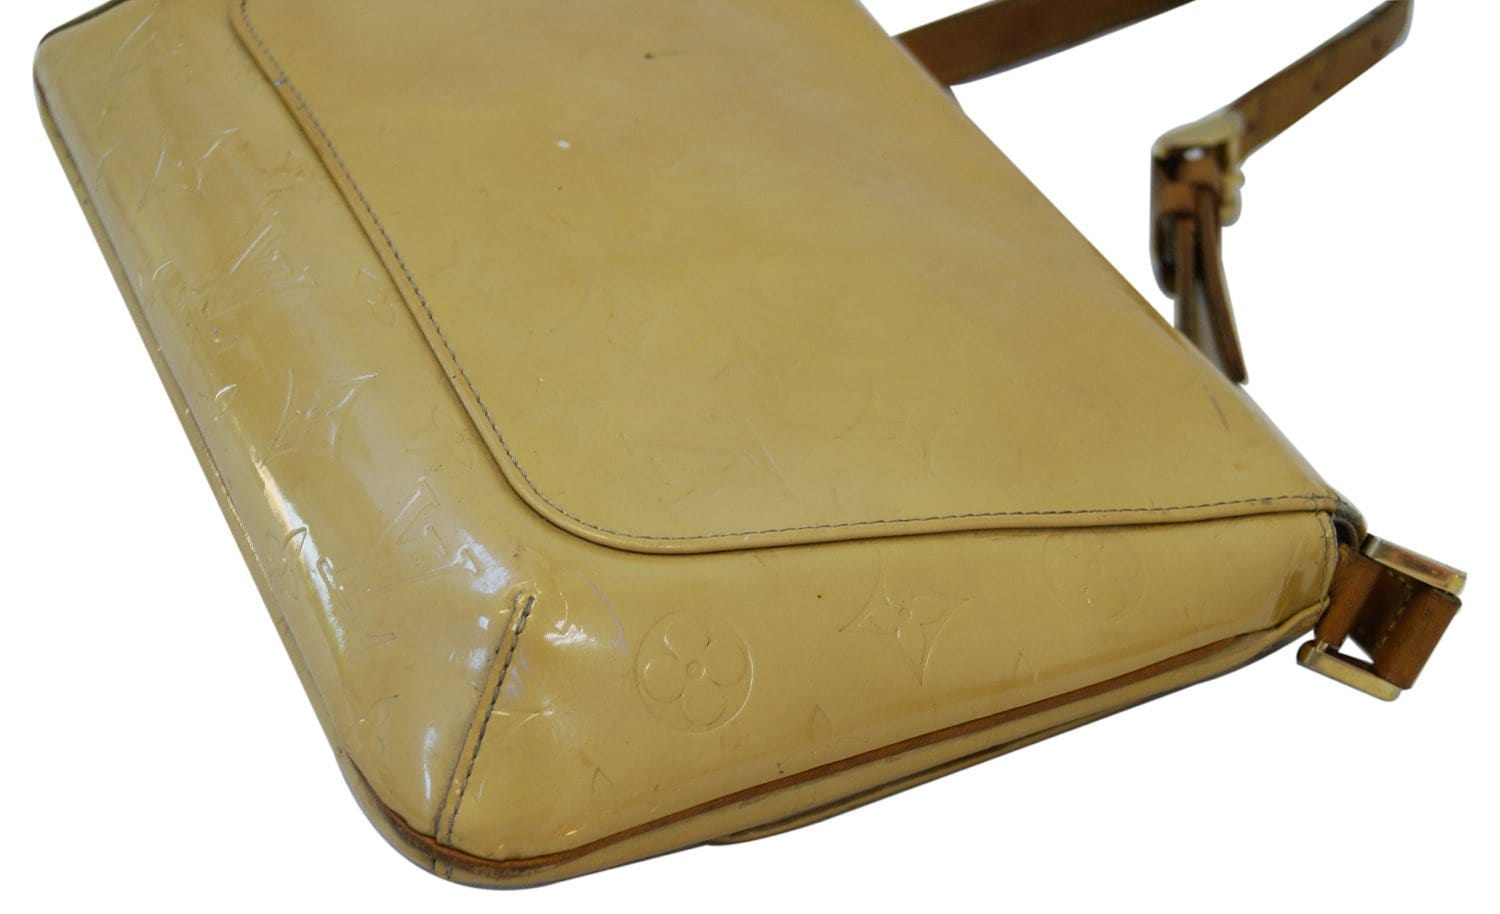 Yellow Louis Vuitton Monogram Vernis Thompson Street Shoulder Bag